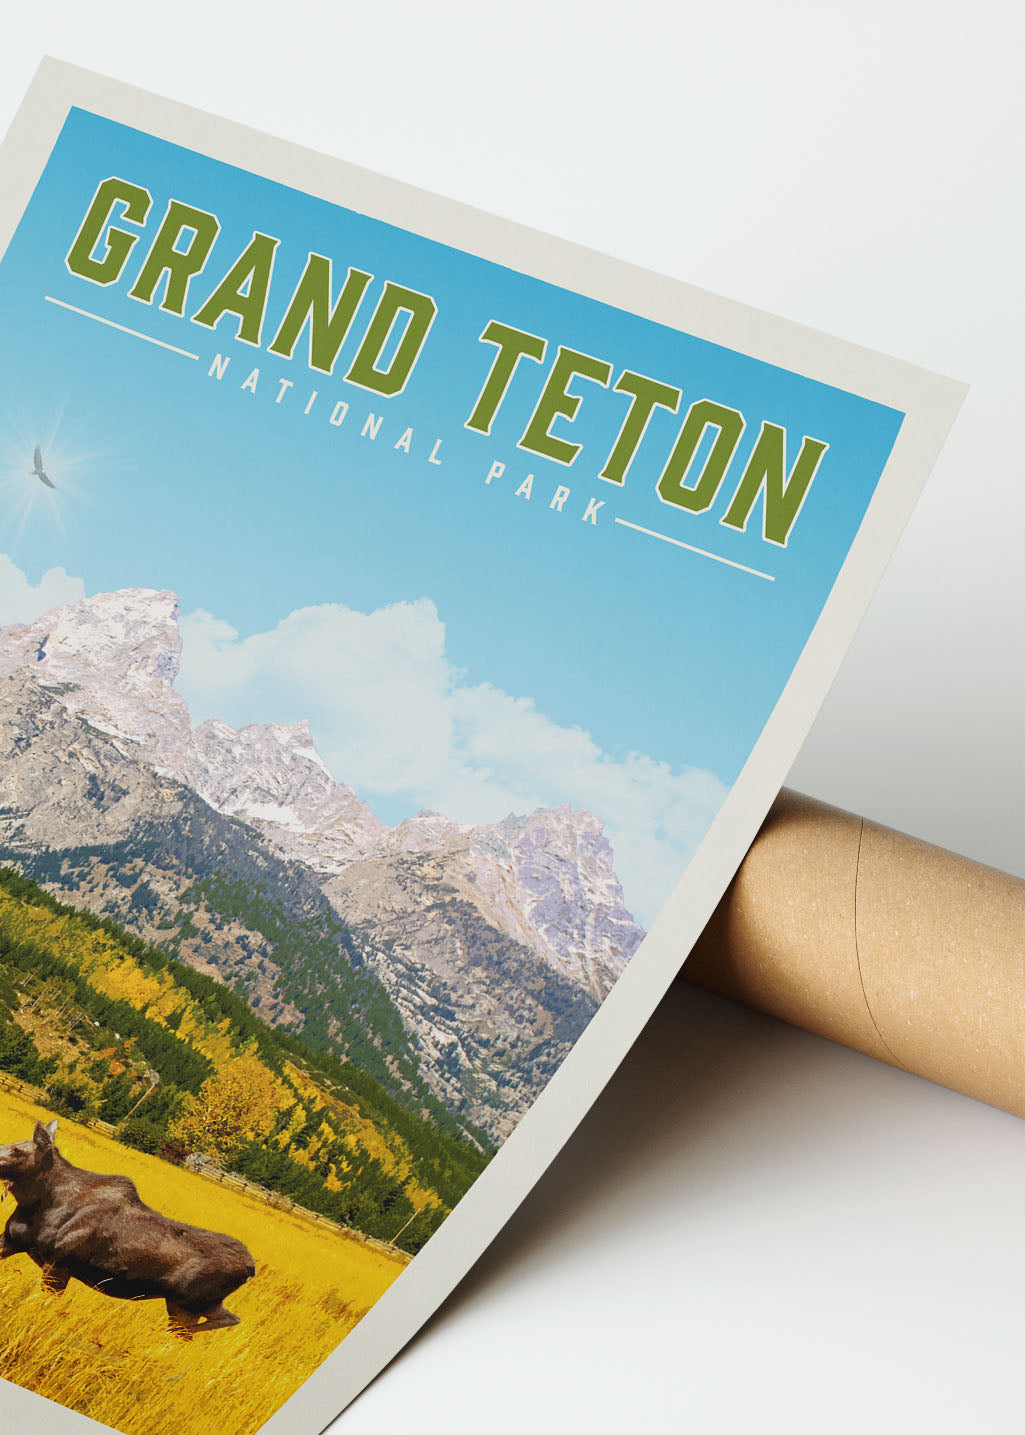 Grand Teton Minimalist National Park Poster